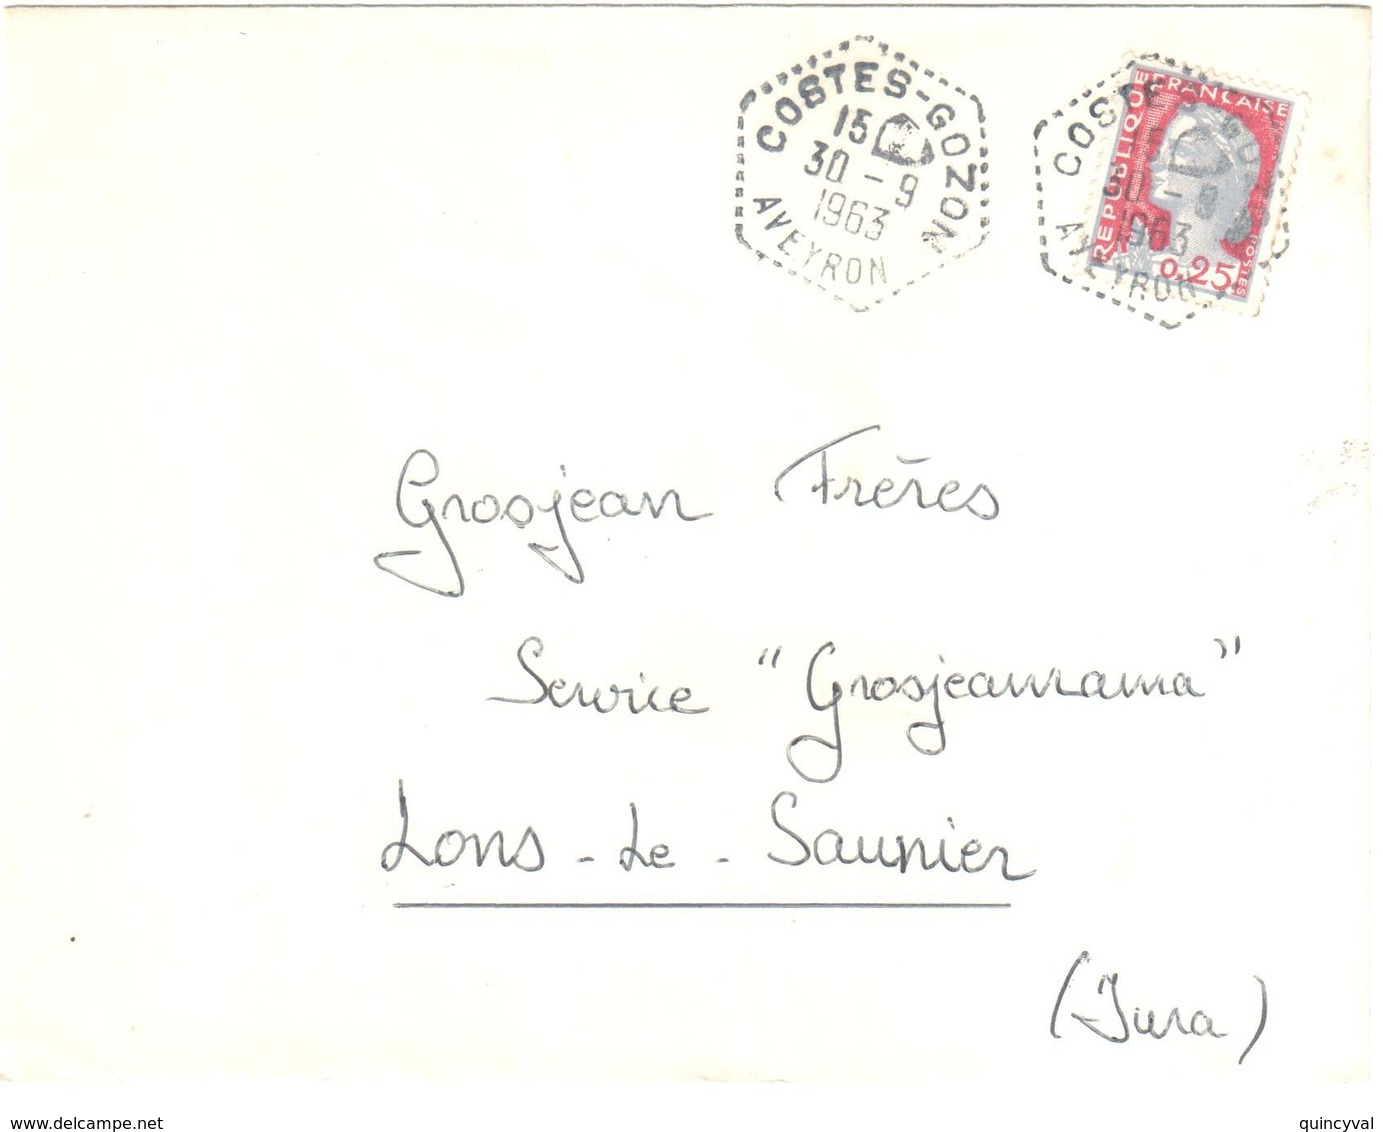 COSTES-GOZON Aveyron Lettre 25 C Marianne Decaris Yv 1263 Ob 30 9 1963 Ob Hexagone Pointillé Agence Postale Lautier F7 - Storia Postale